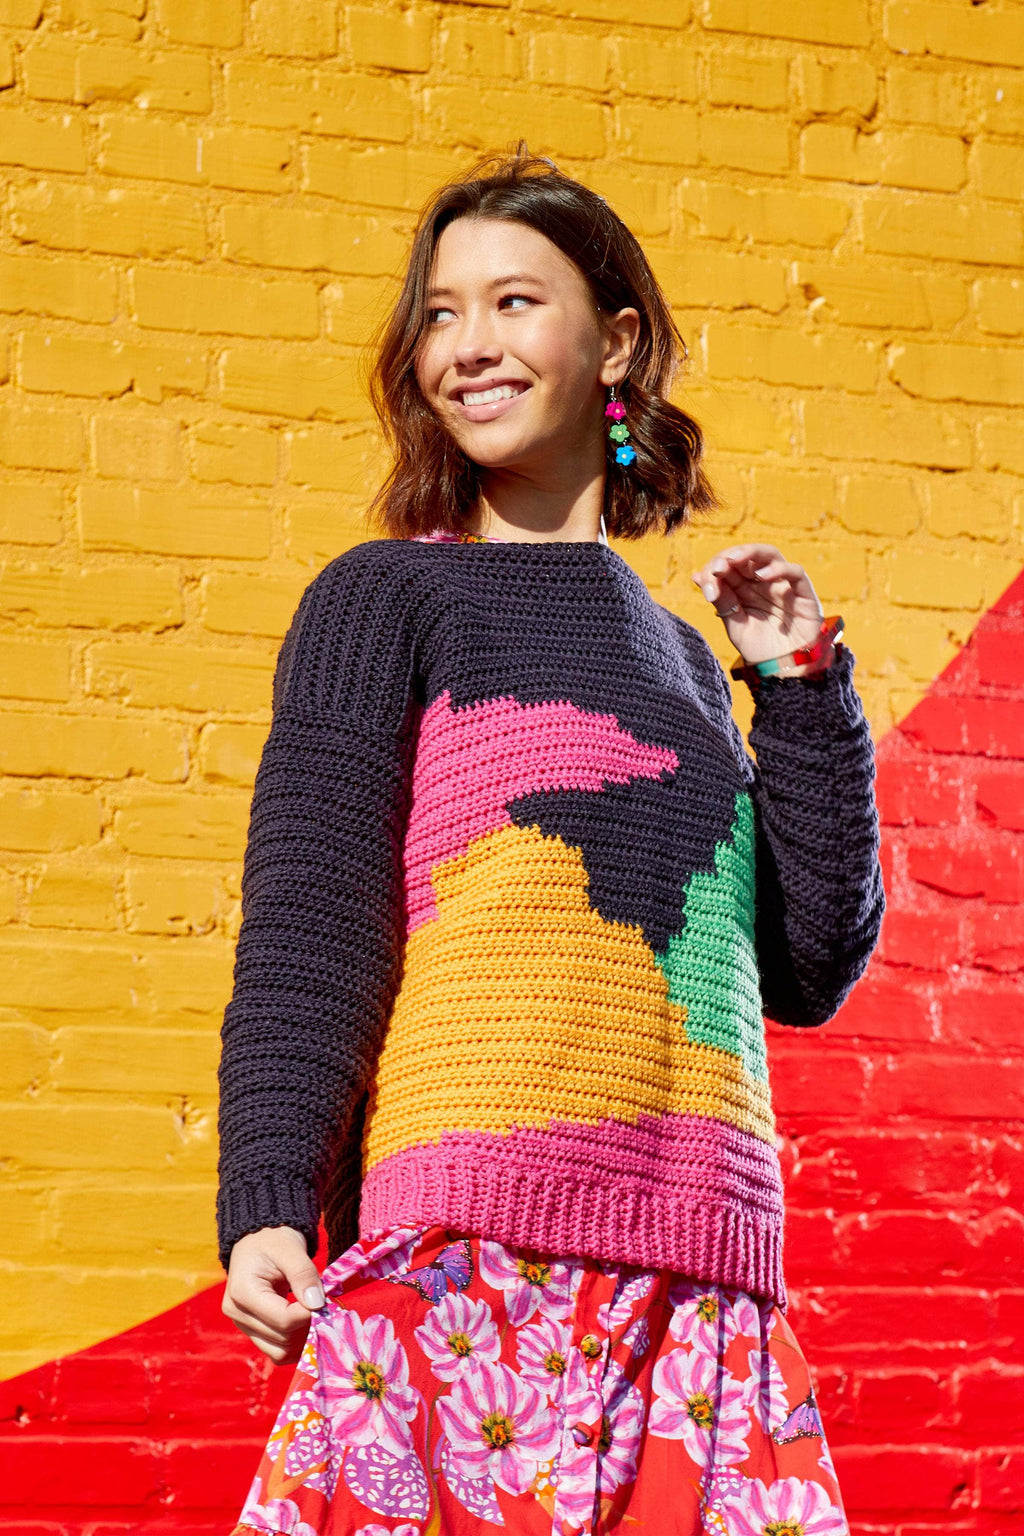 Women Multicolour Get Back Knit Intarsia Jumper